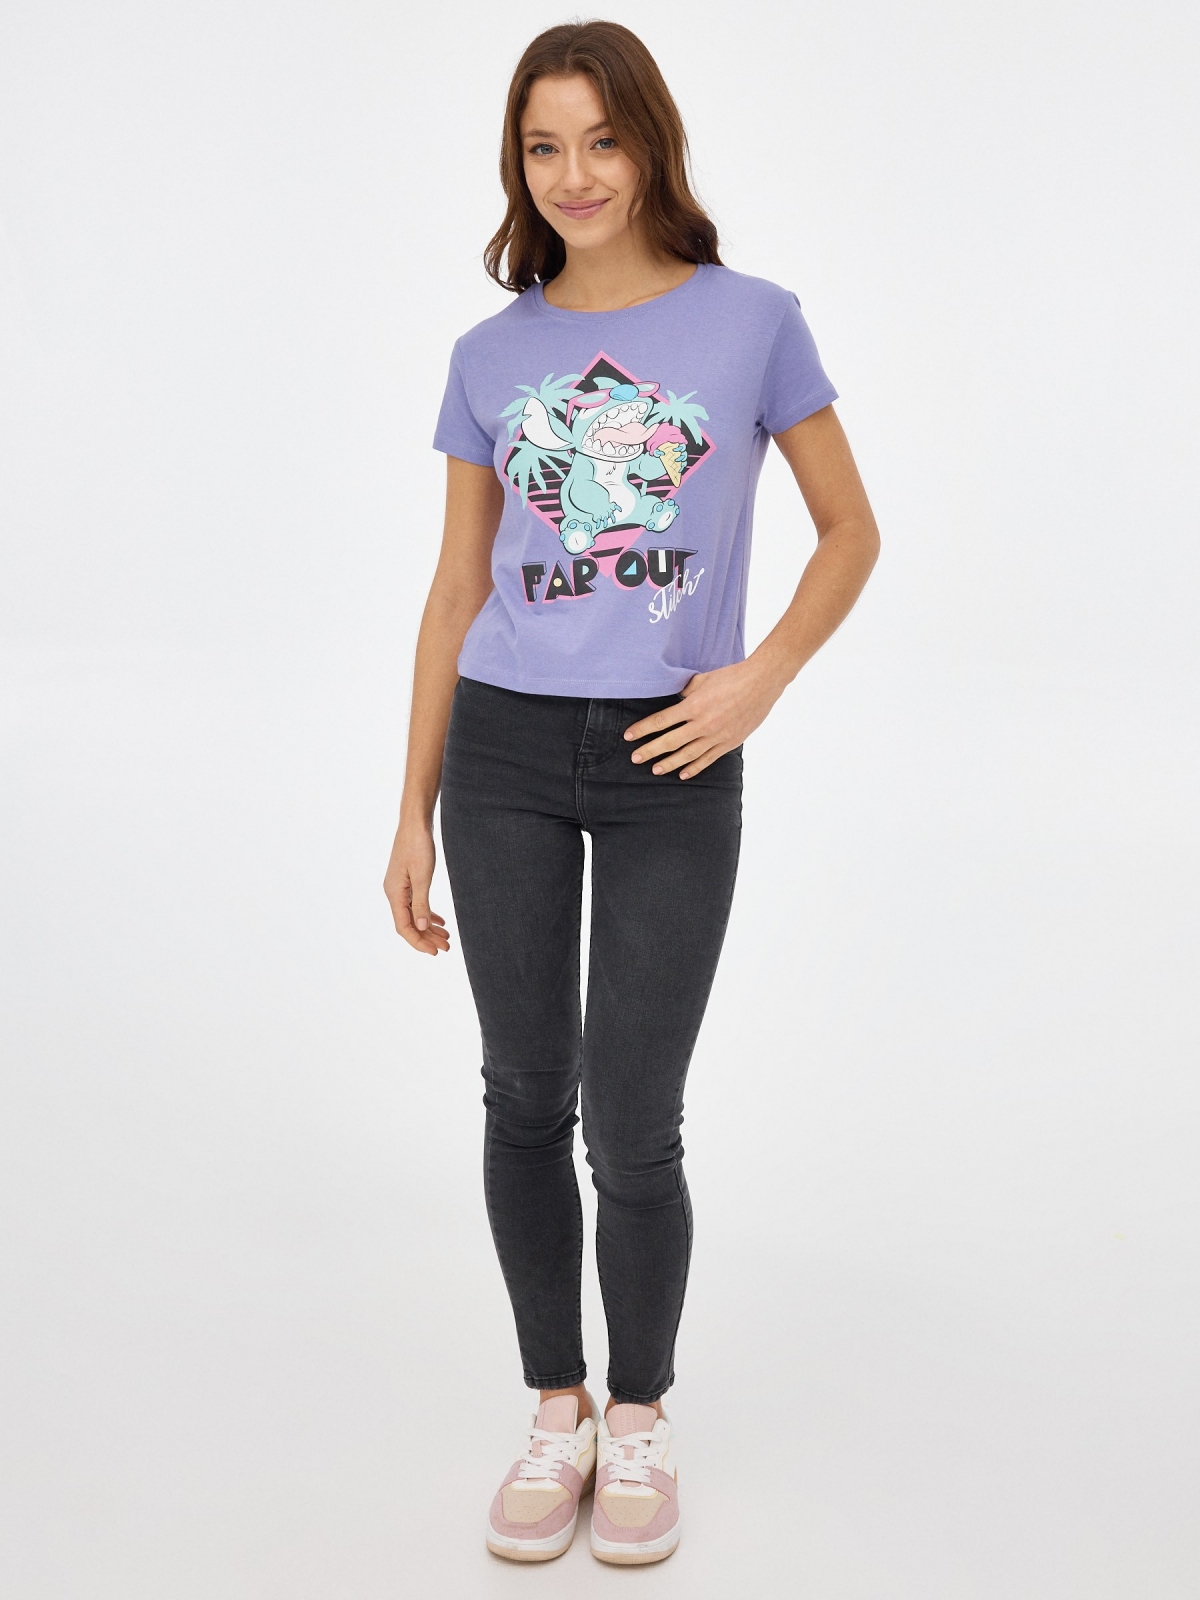 T-shirt Stitch lilás vista geral frontal